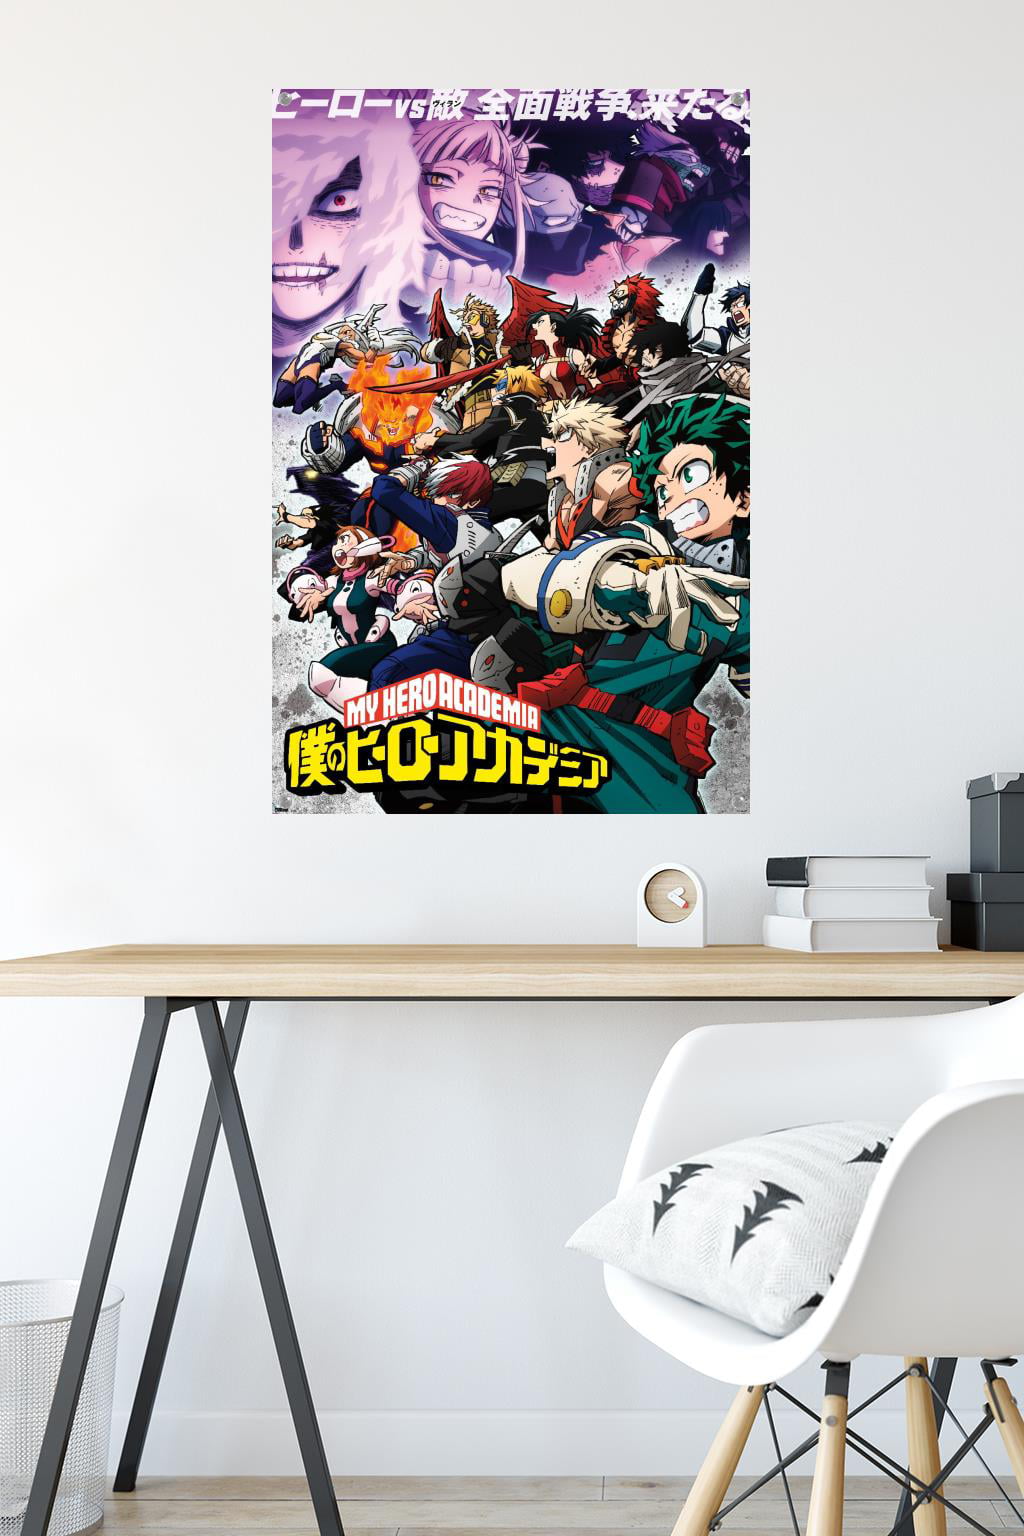  Trends International My Hero Academia: Season 6 - Key Art Wall  Poster, 22.37 x 34.00, Premium Unframed Version: Posters & Prints